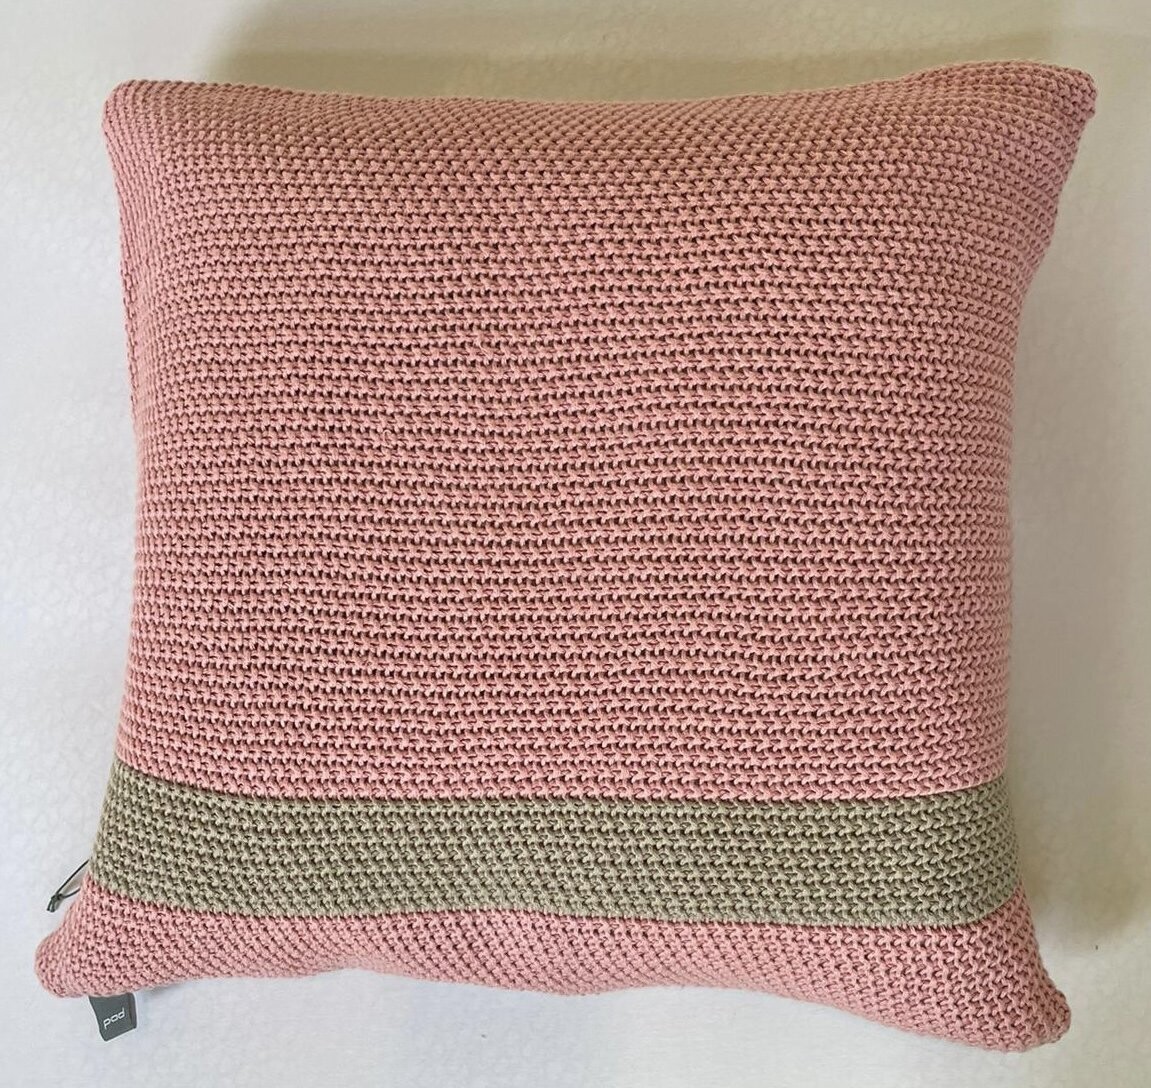 Kissenbezug Magic pink in 45x45 cm, pad home